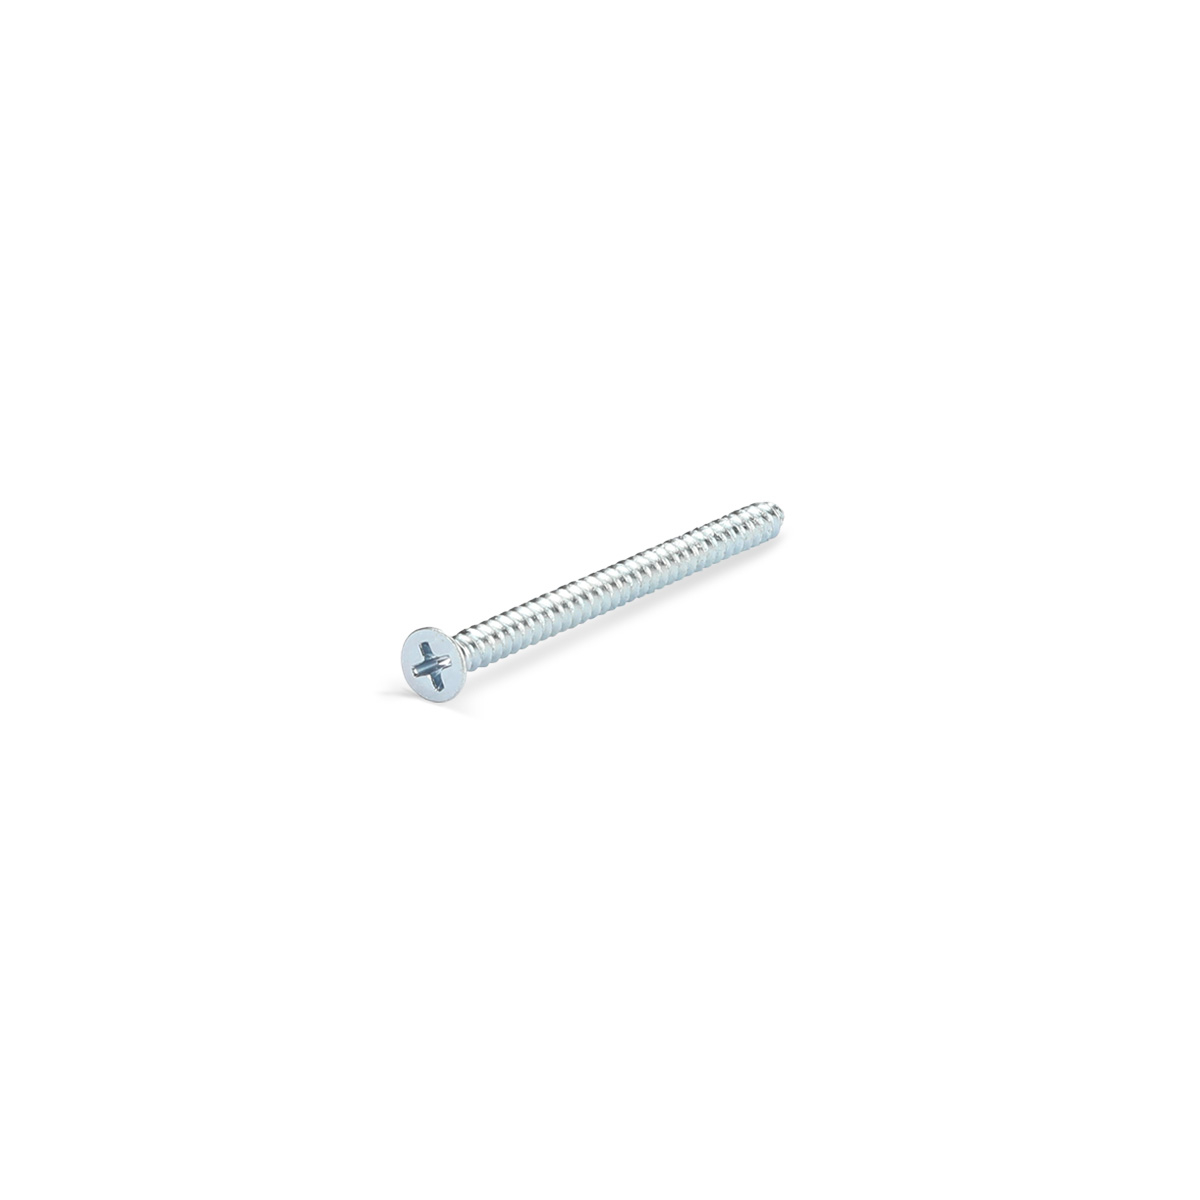 Sheet metal screws, Self tapping, Phillips flat head, Zinc plated steel, #8 x 2-1/2